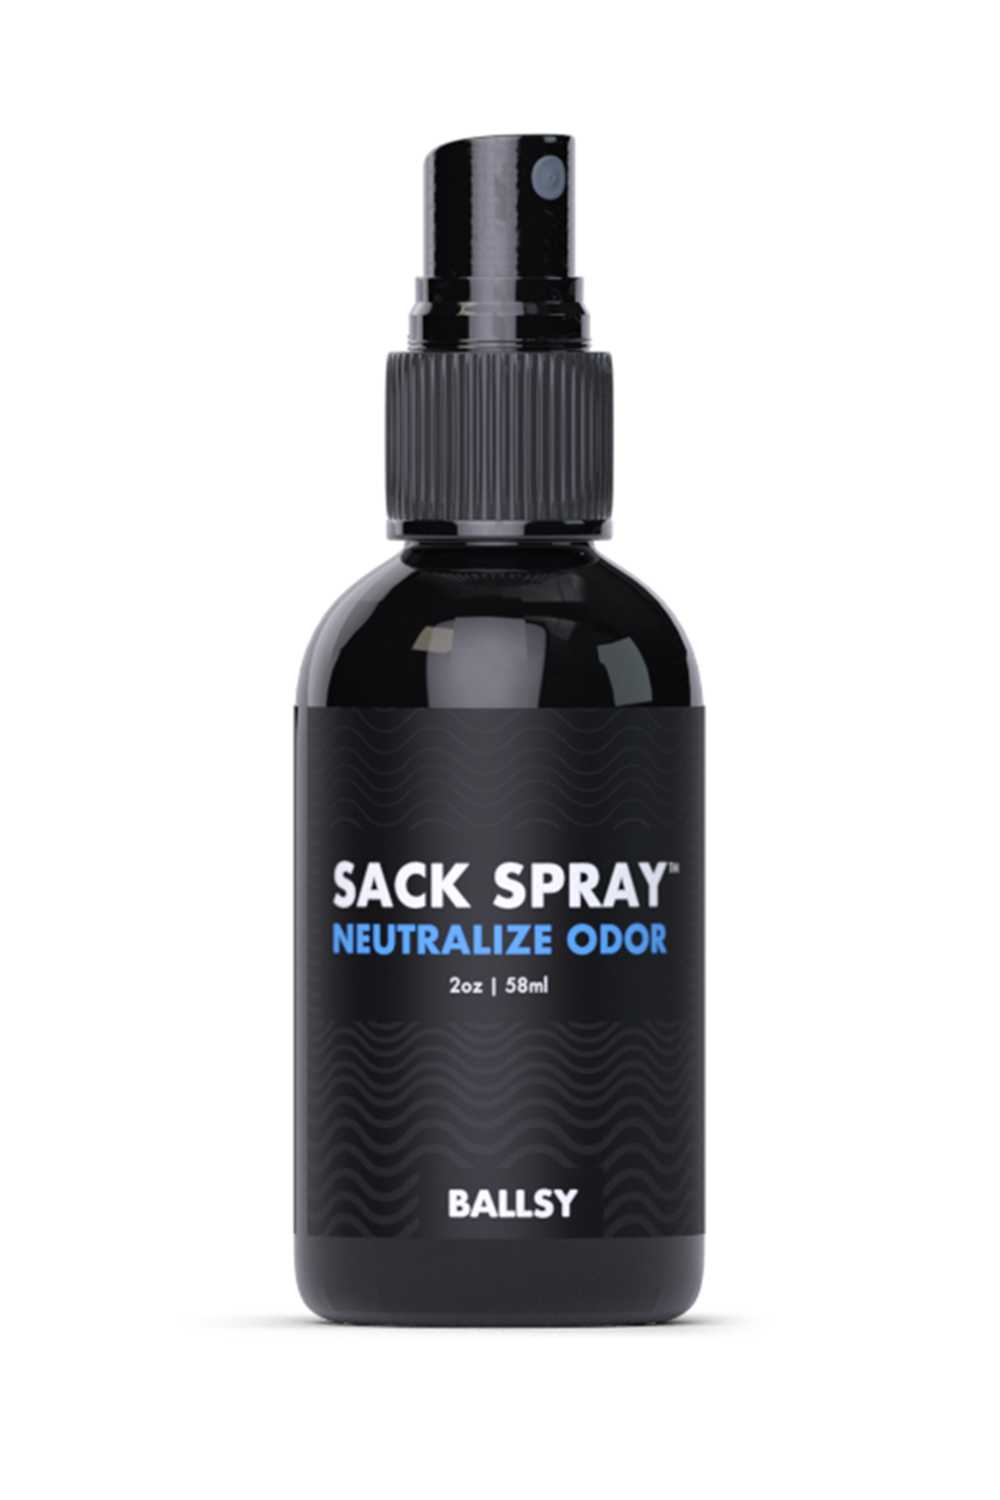 SIDEWALK SALE ITEM - Ballsy Sack Spray